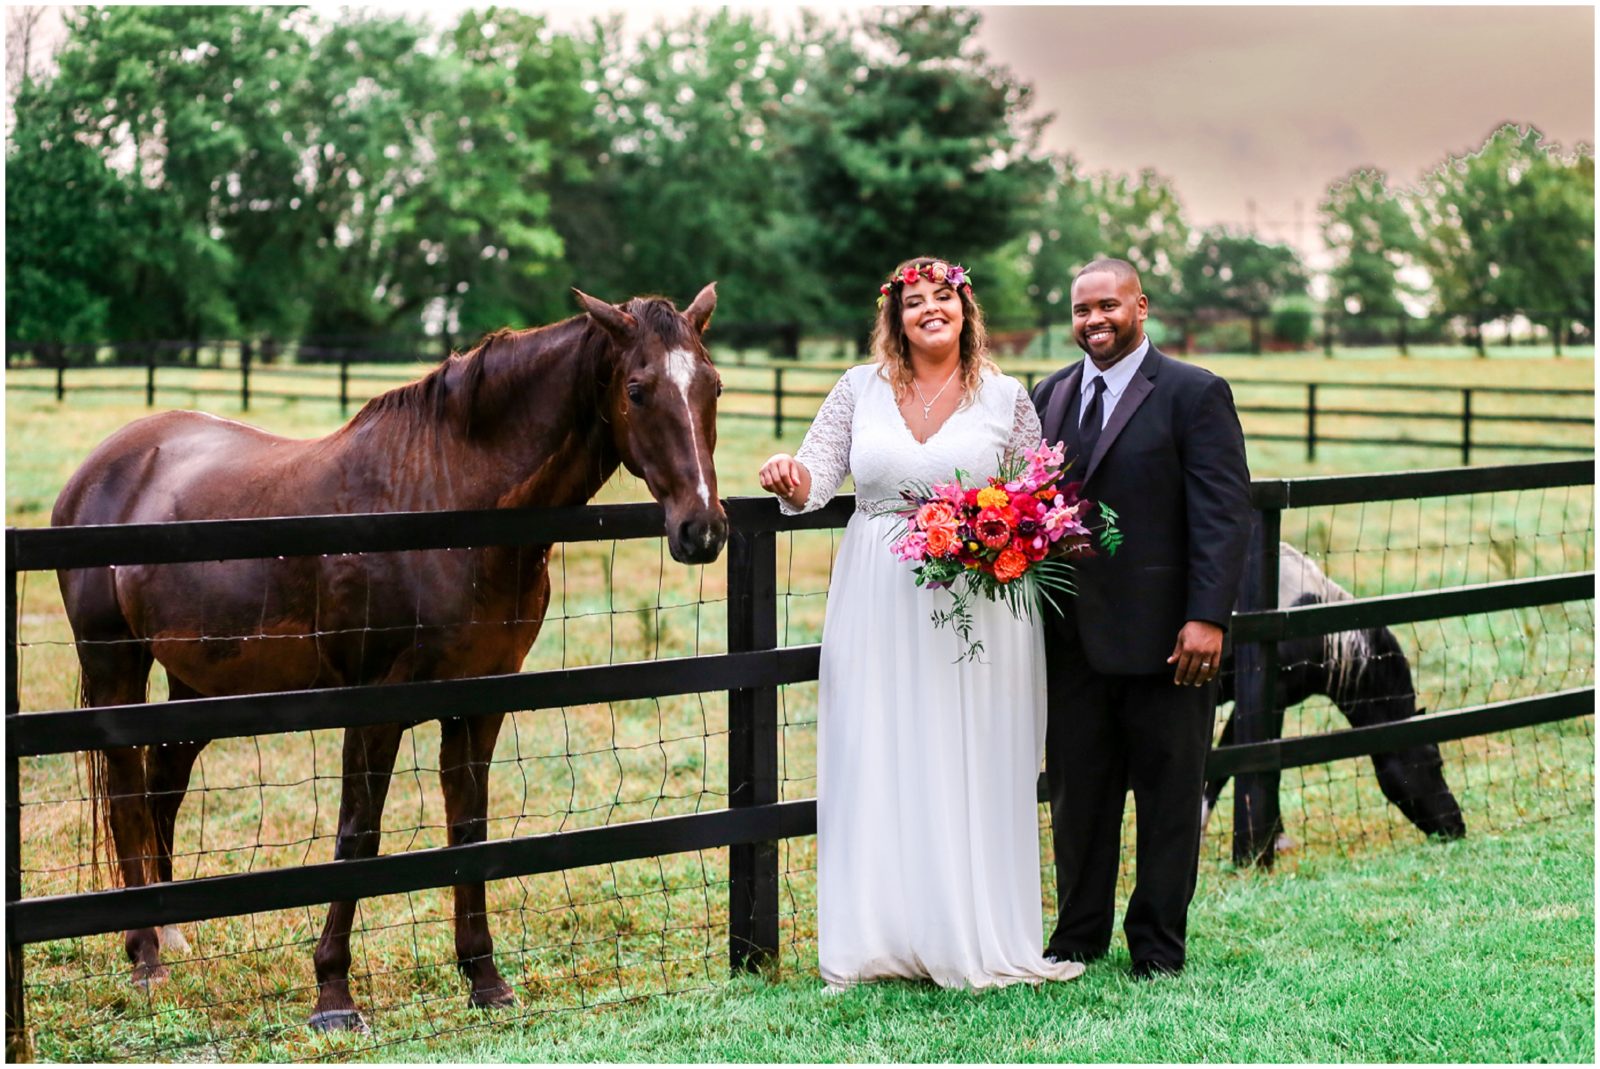 Tropical Wedding Details - Mariam Saifan Photography - Kansas City Overland Park Portrait and Wedding Photographer 